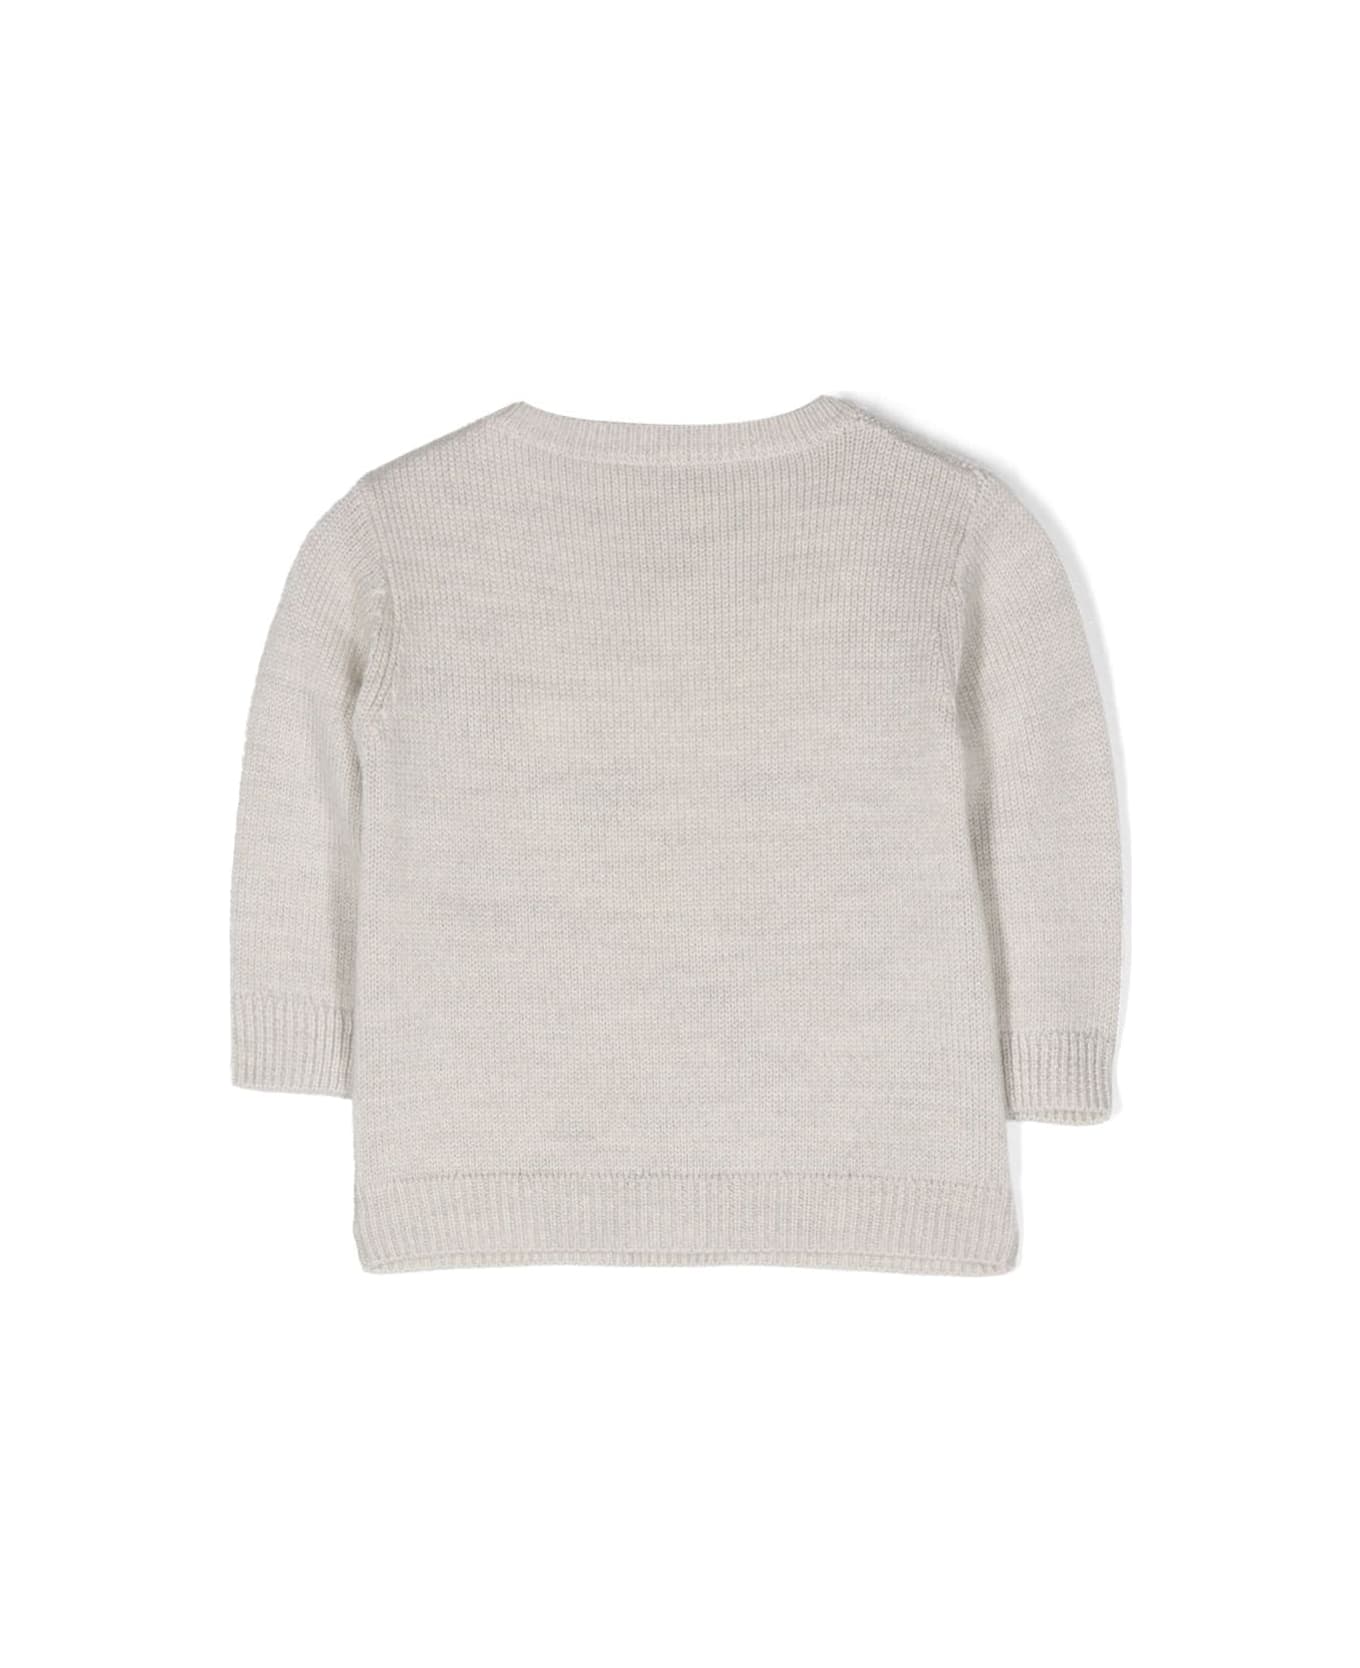 Bonpoint Almire Sweater - Light Grey